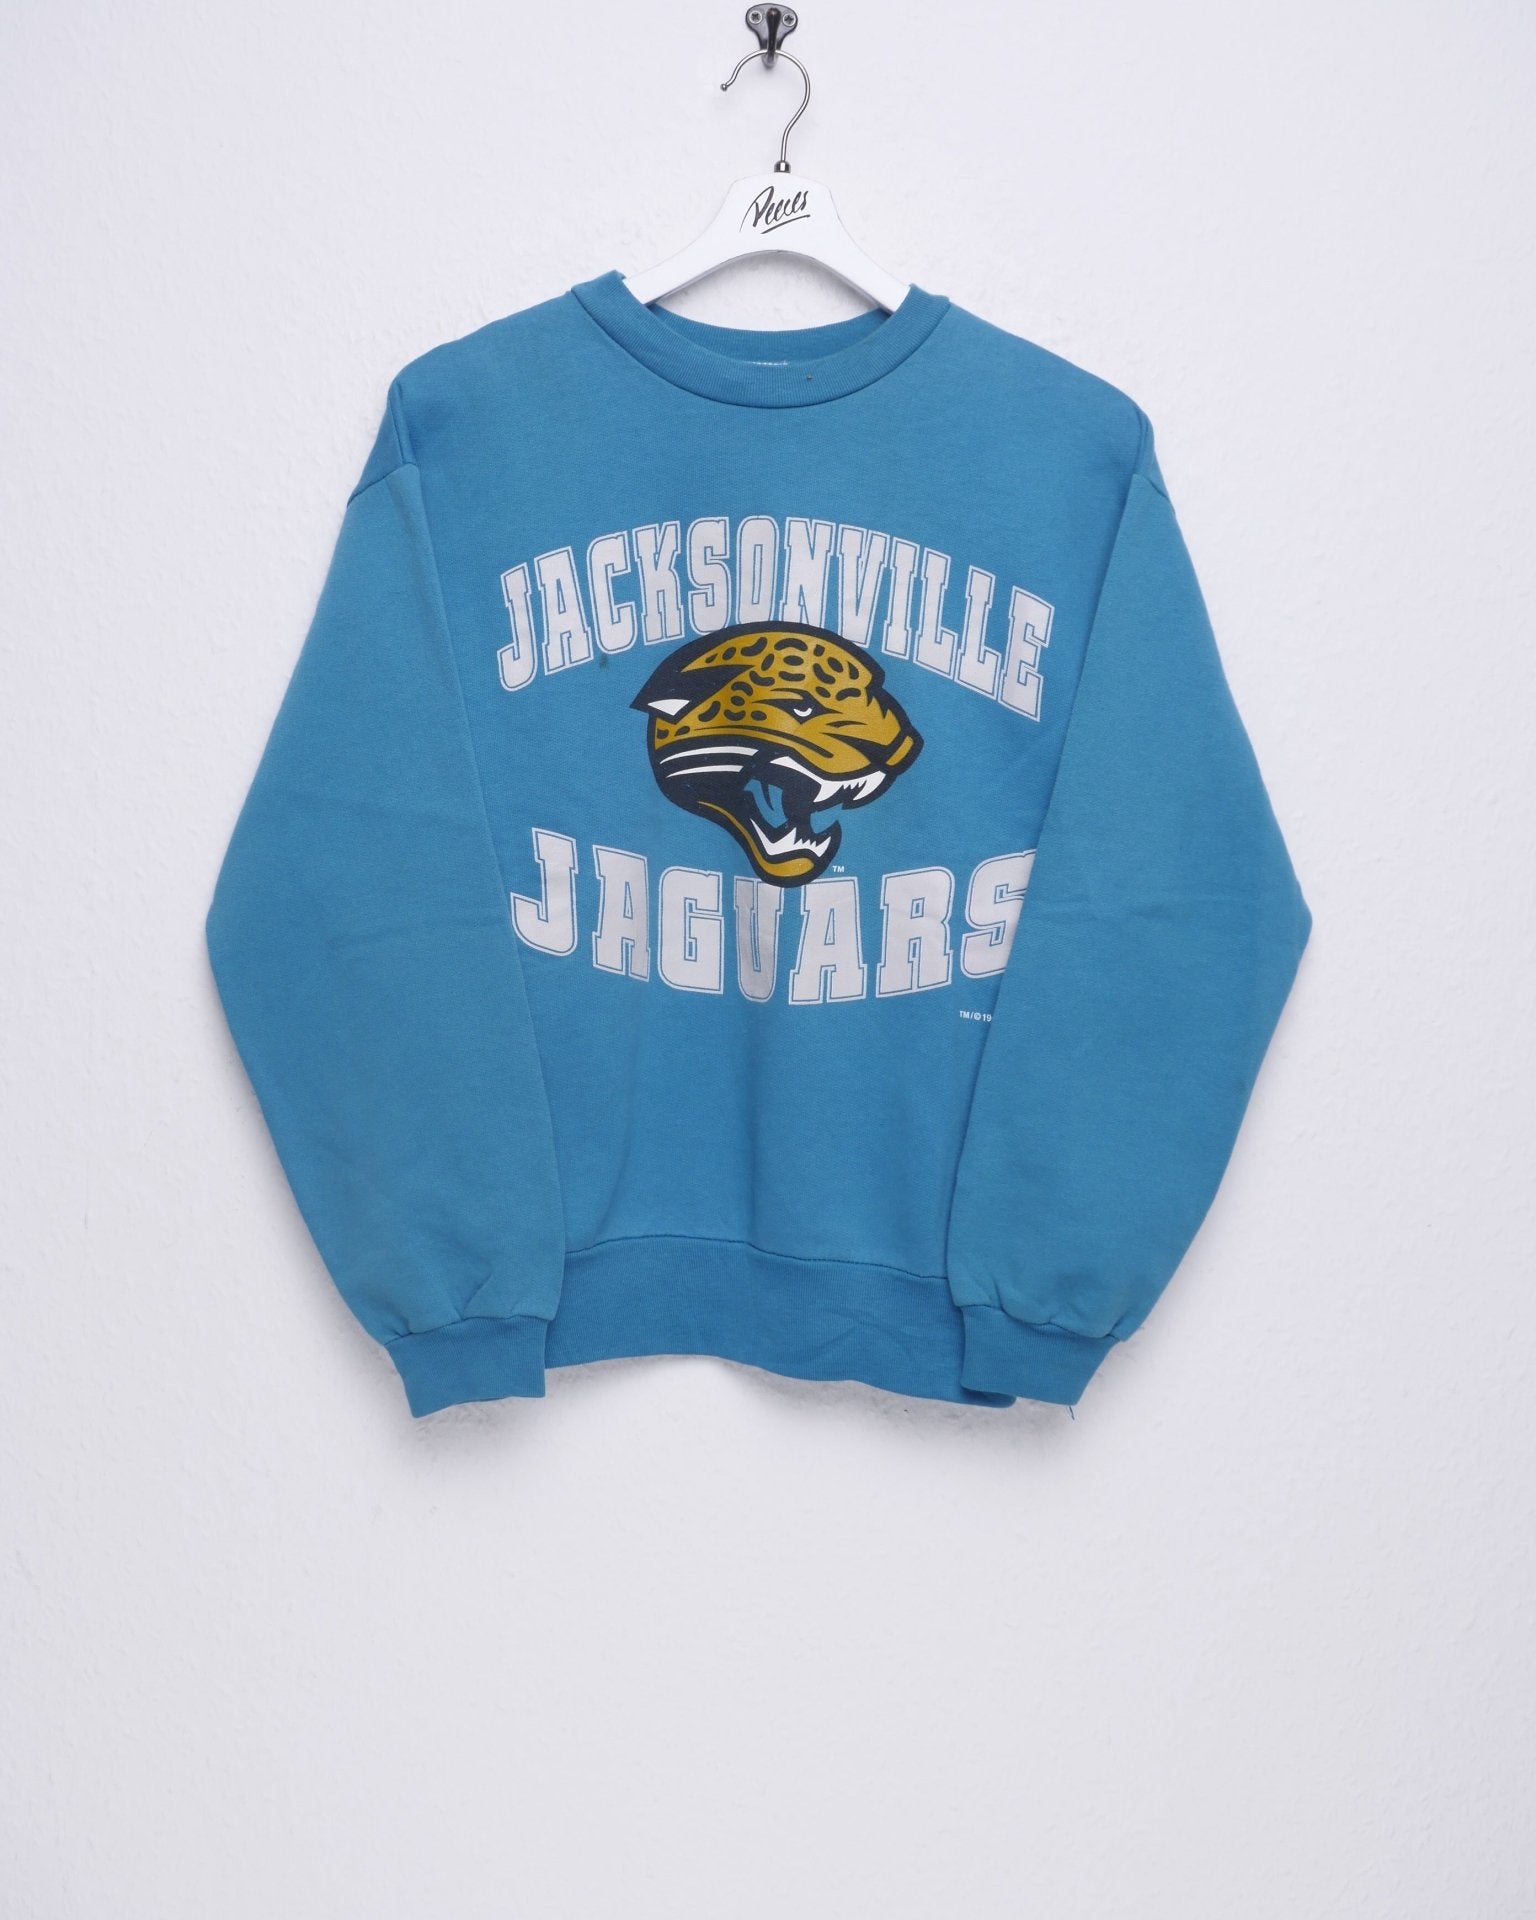 Jacksonville printed Graphic 1997 Vintage Sweater - Peeces